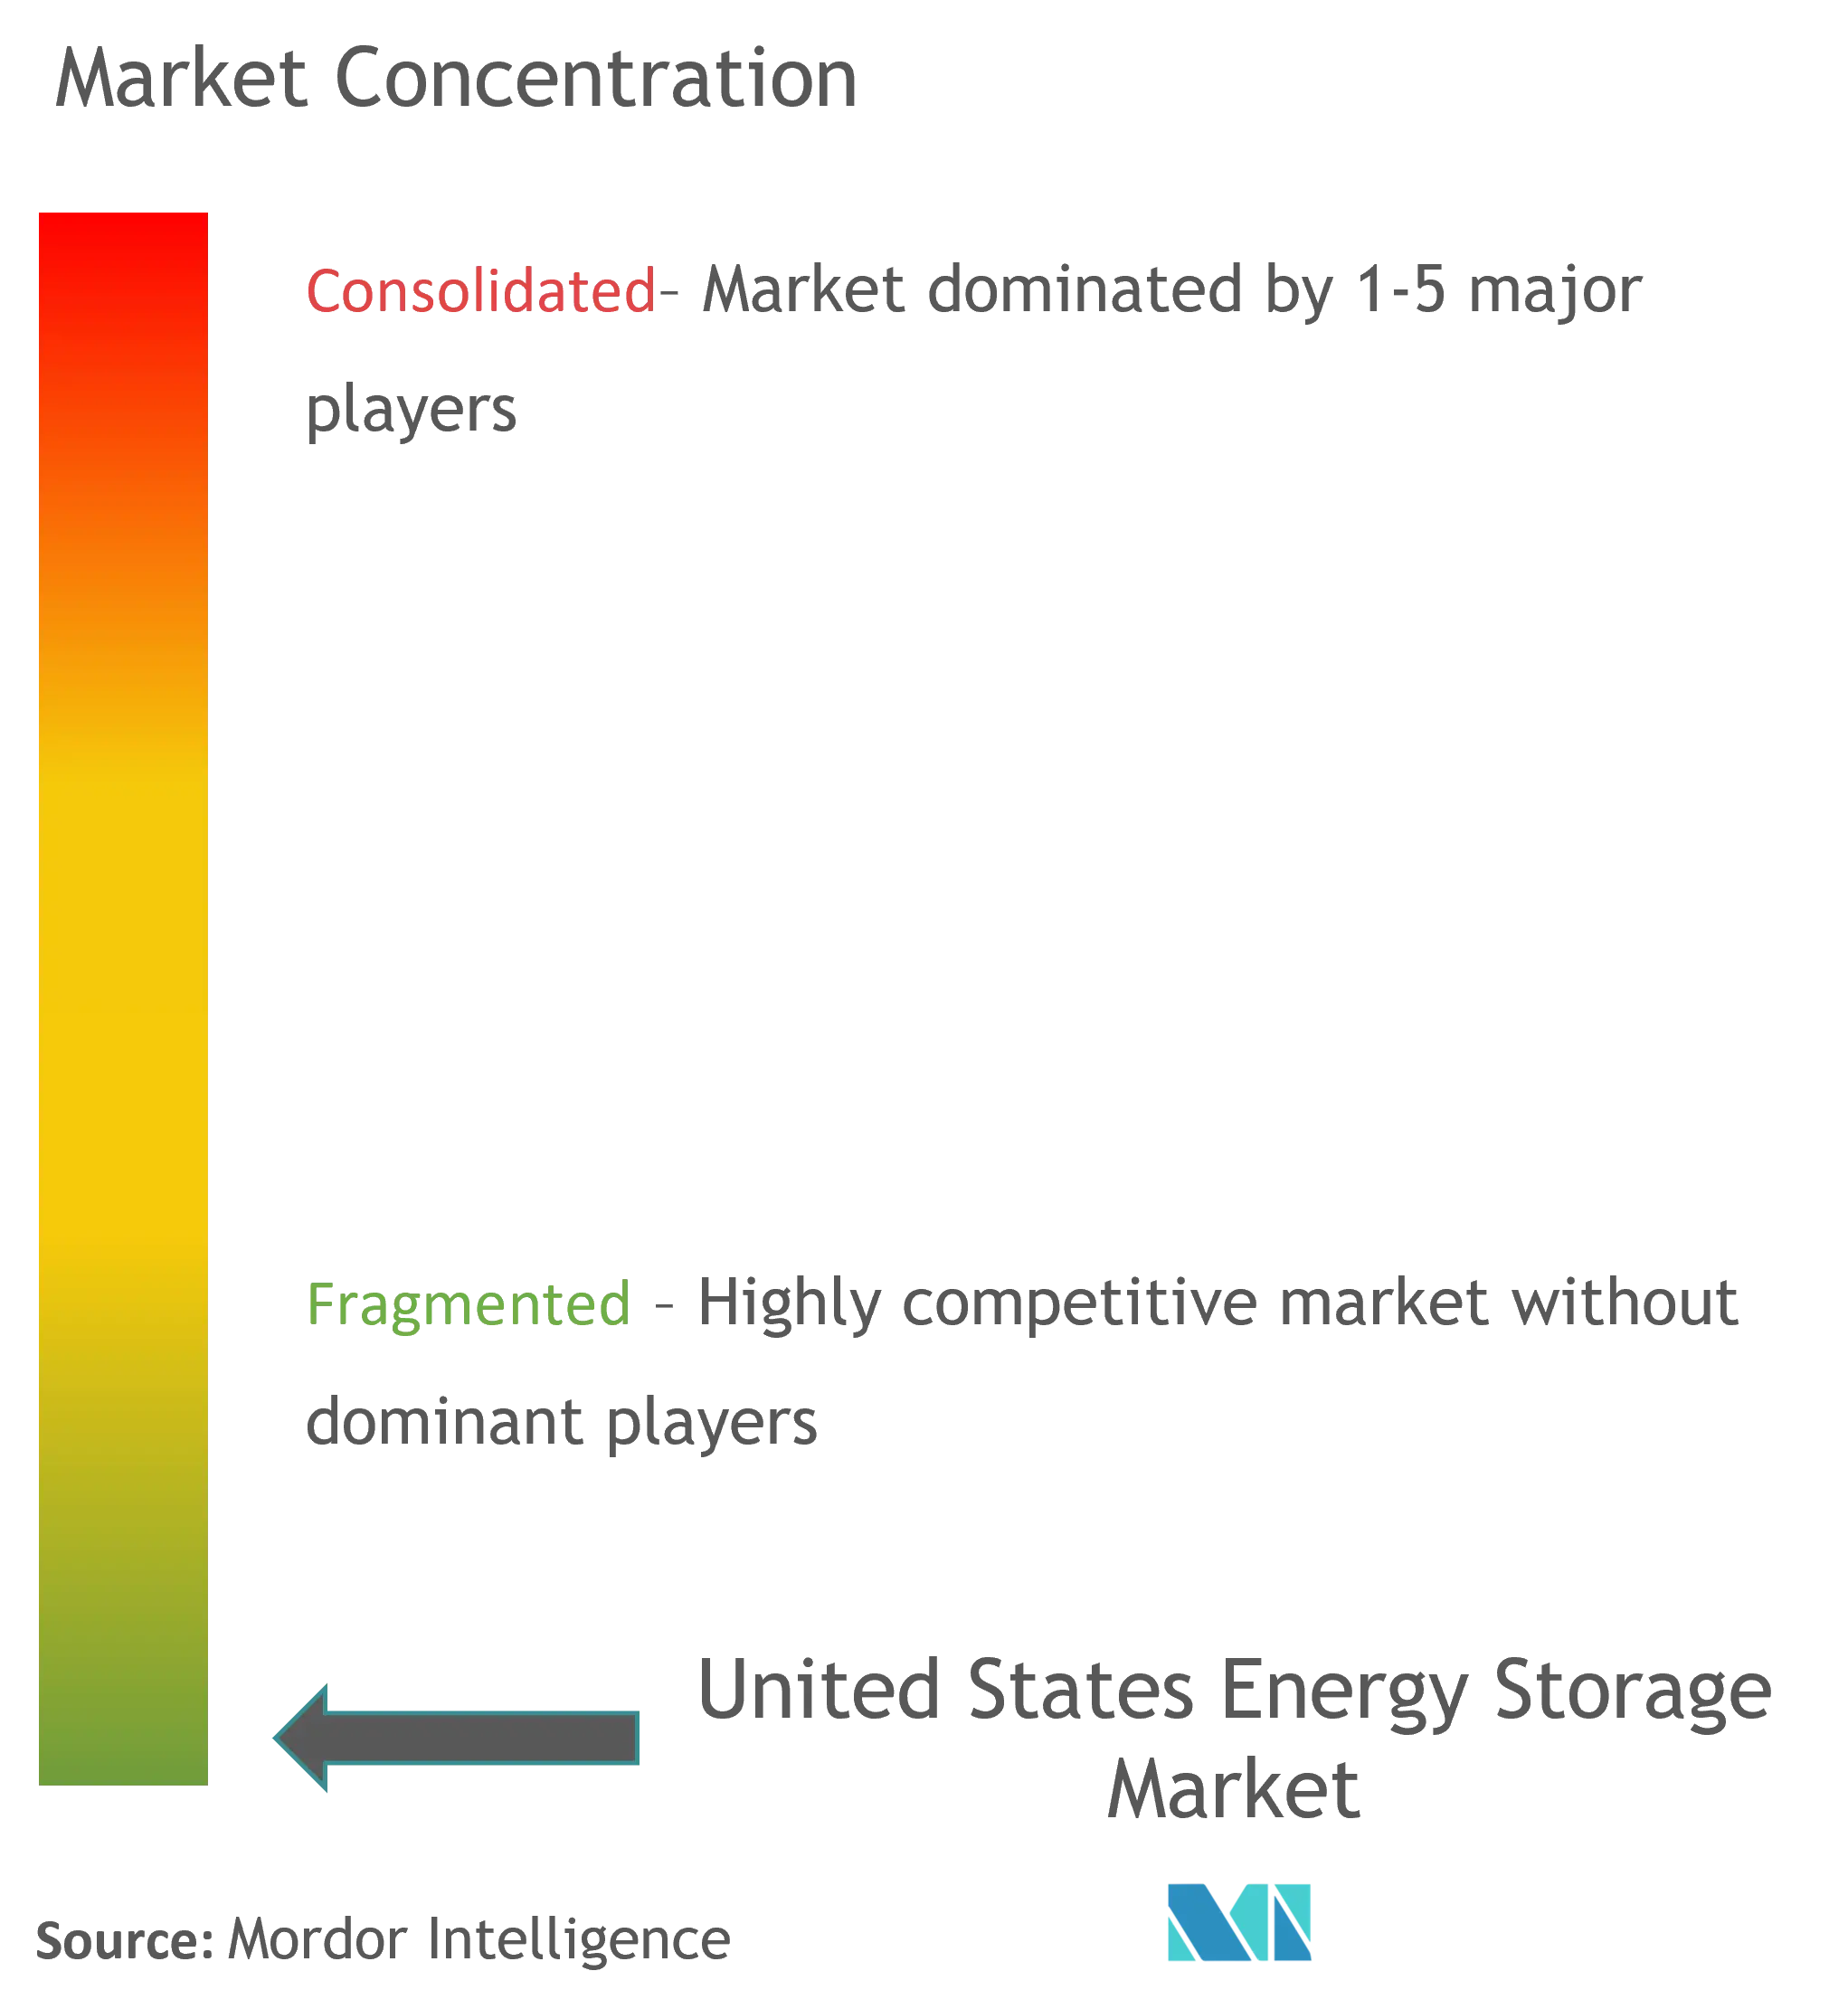 United States Energy Storage Market Concentration